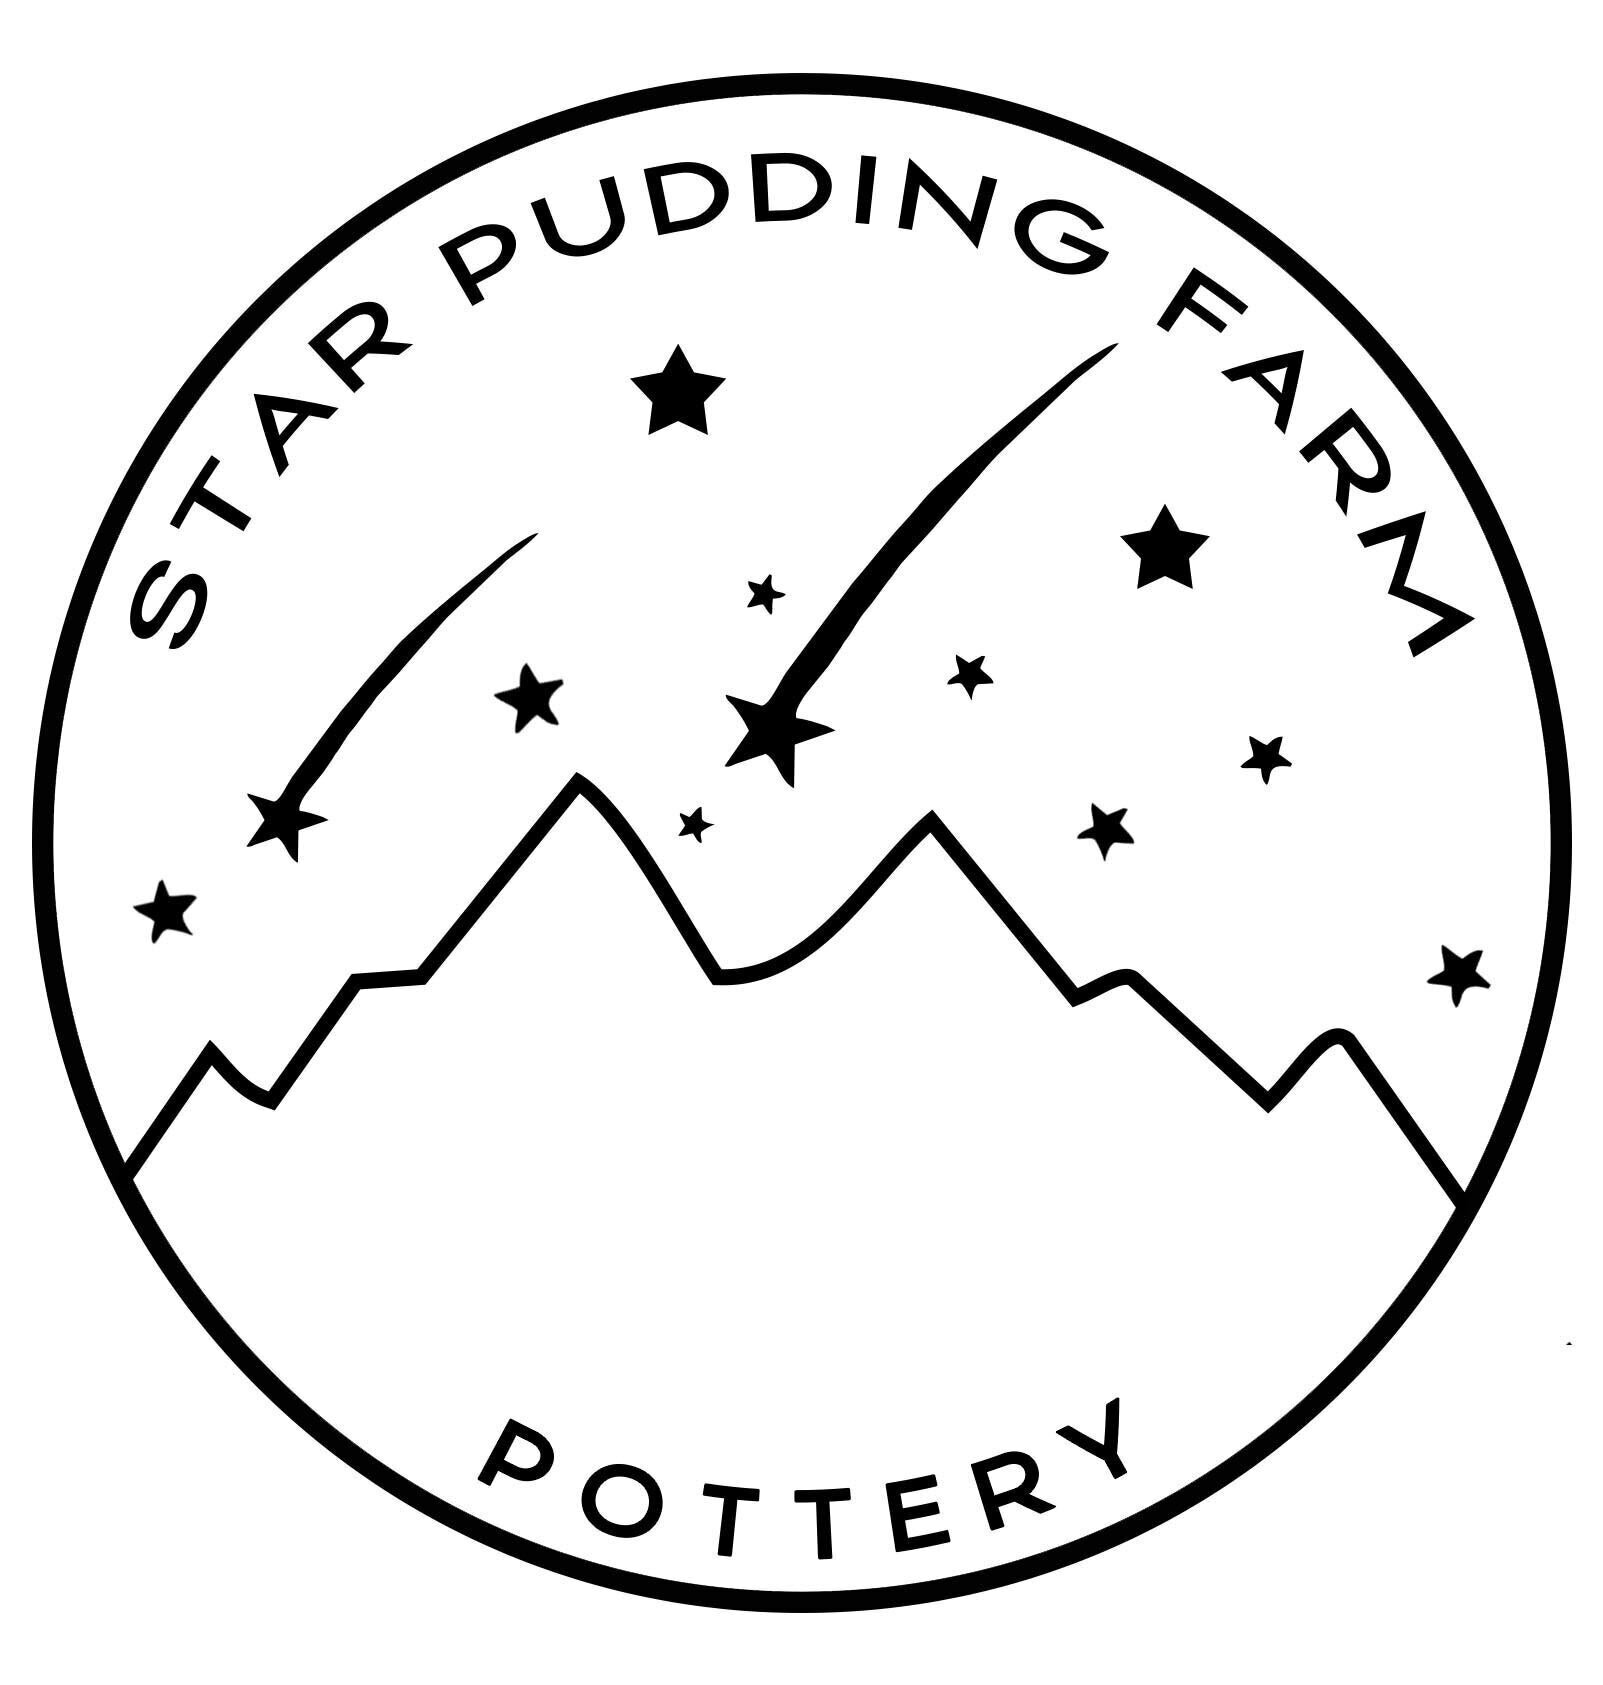 Star Pudding Farm Pottery